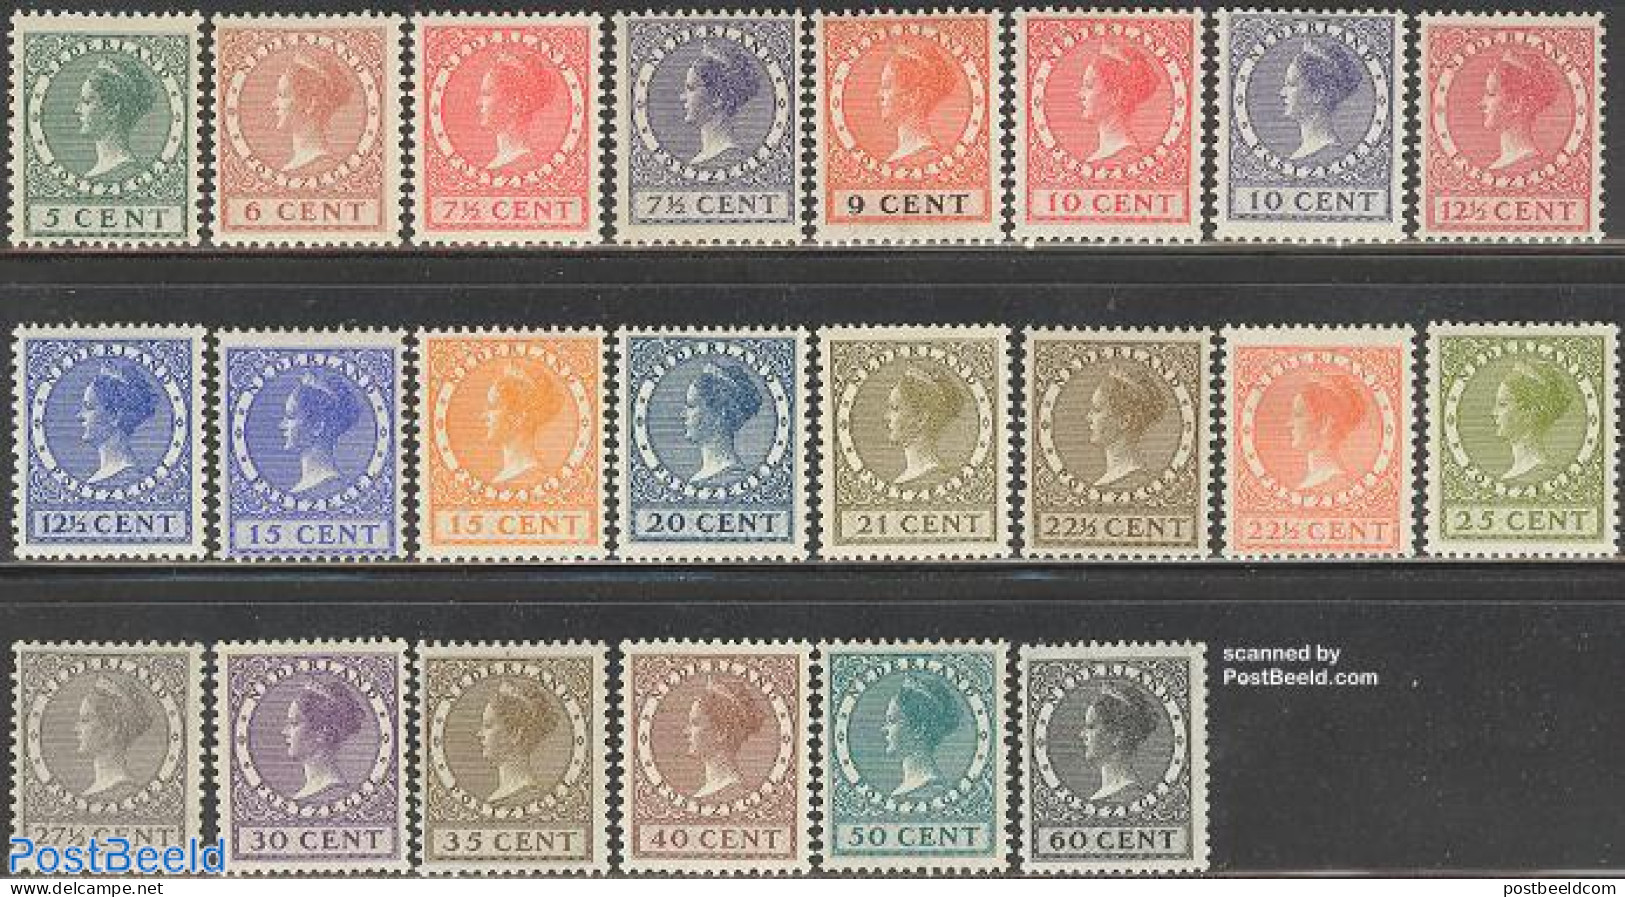 Netherlands 1926 Definitives With WM 22v, Unused (hinged) - Neufs